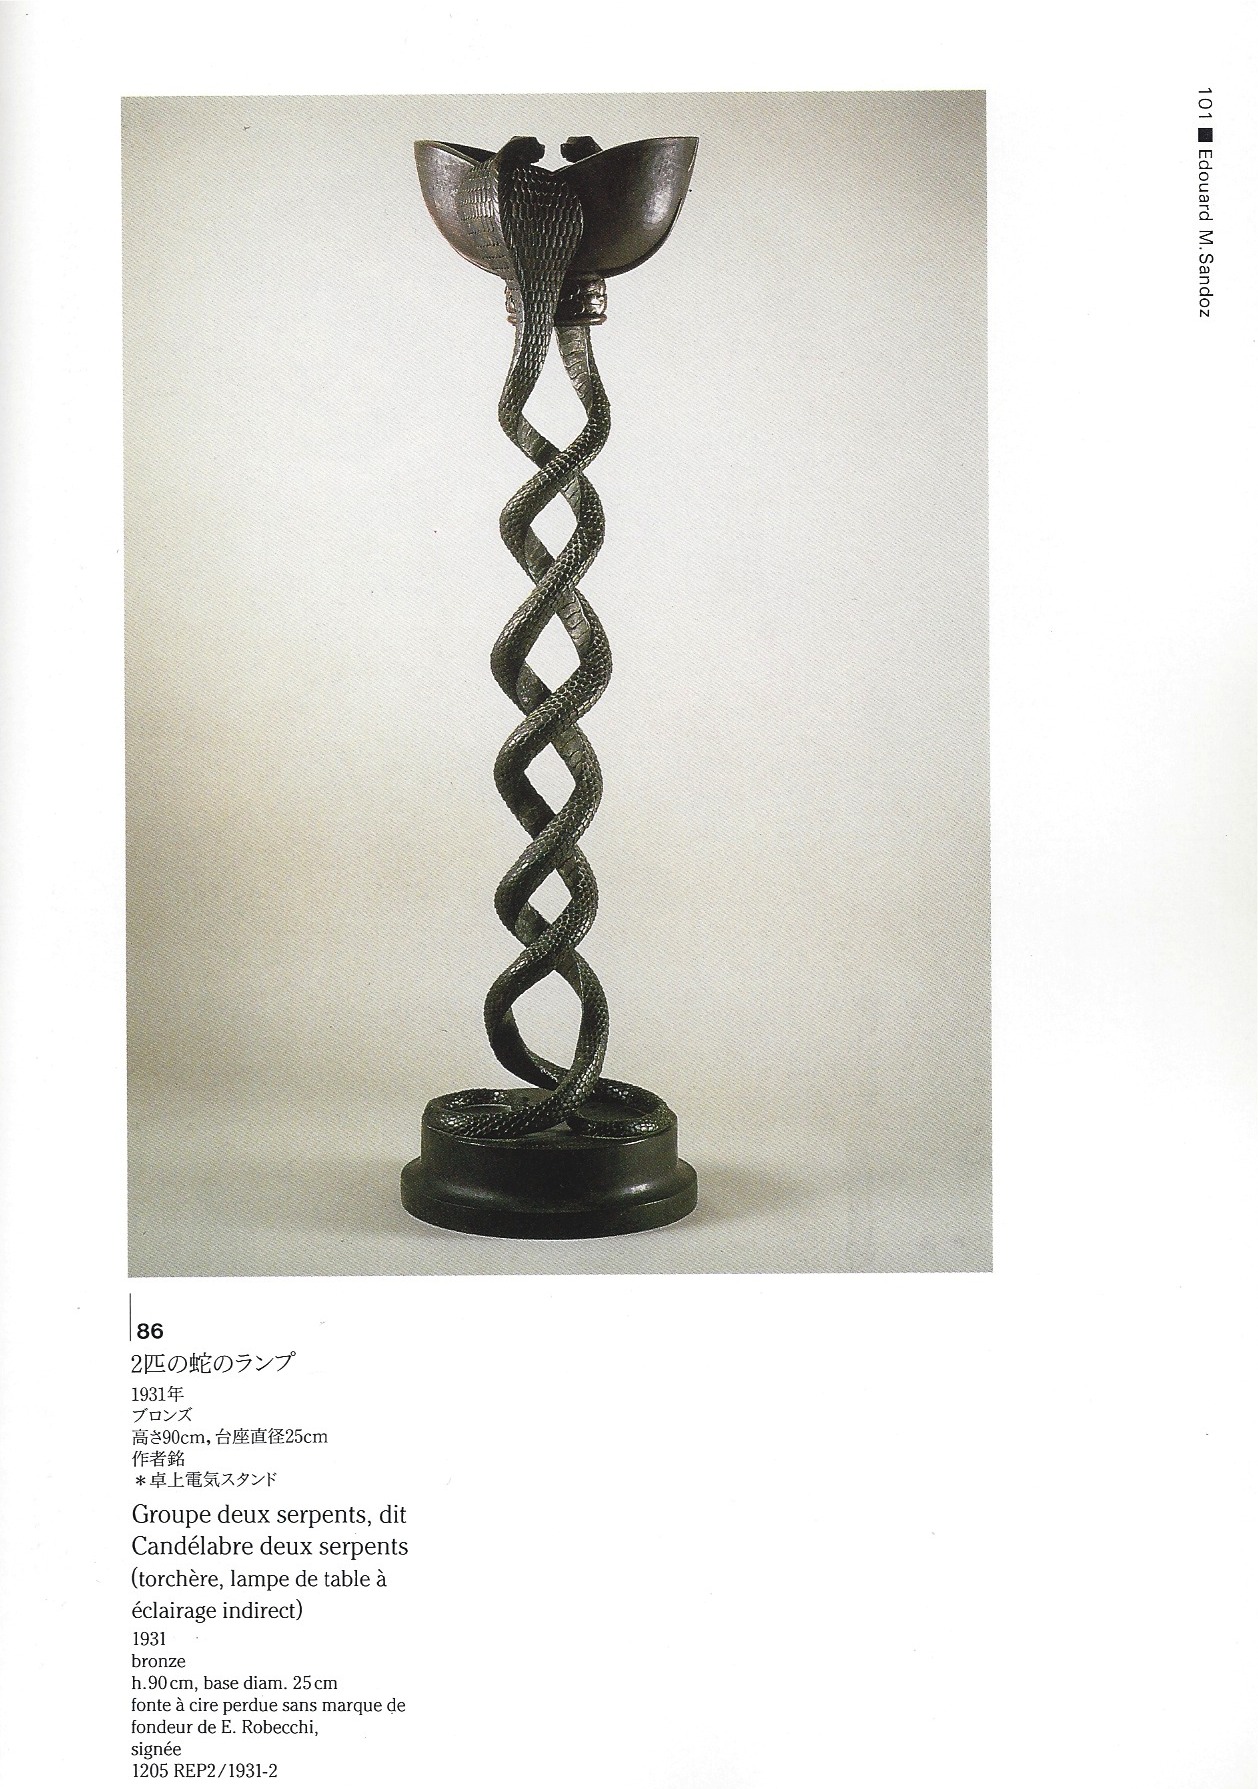 Sandoz Exposition Tokyo Metropolitan Teien Art Museum Page 101 No 86